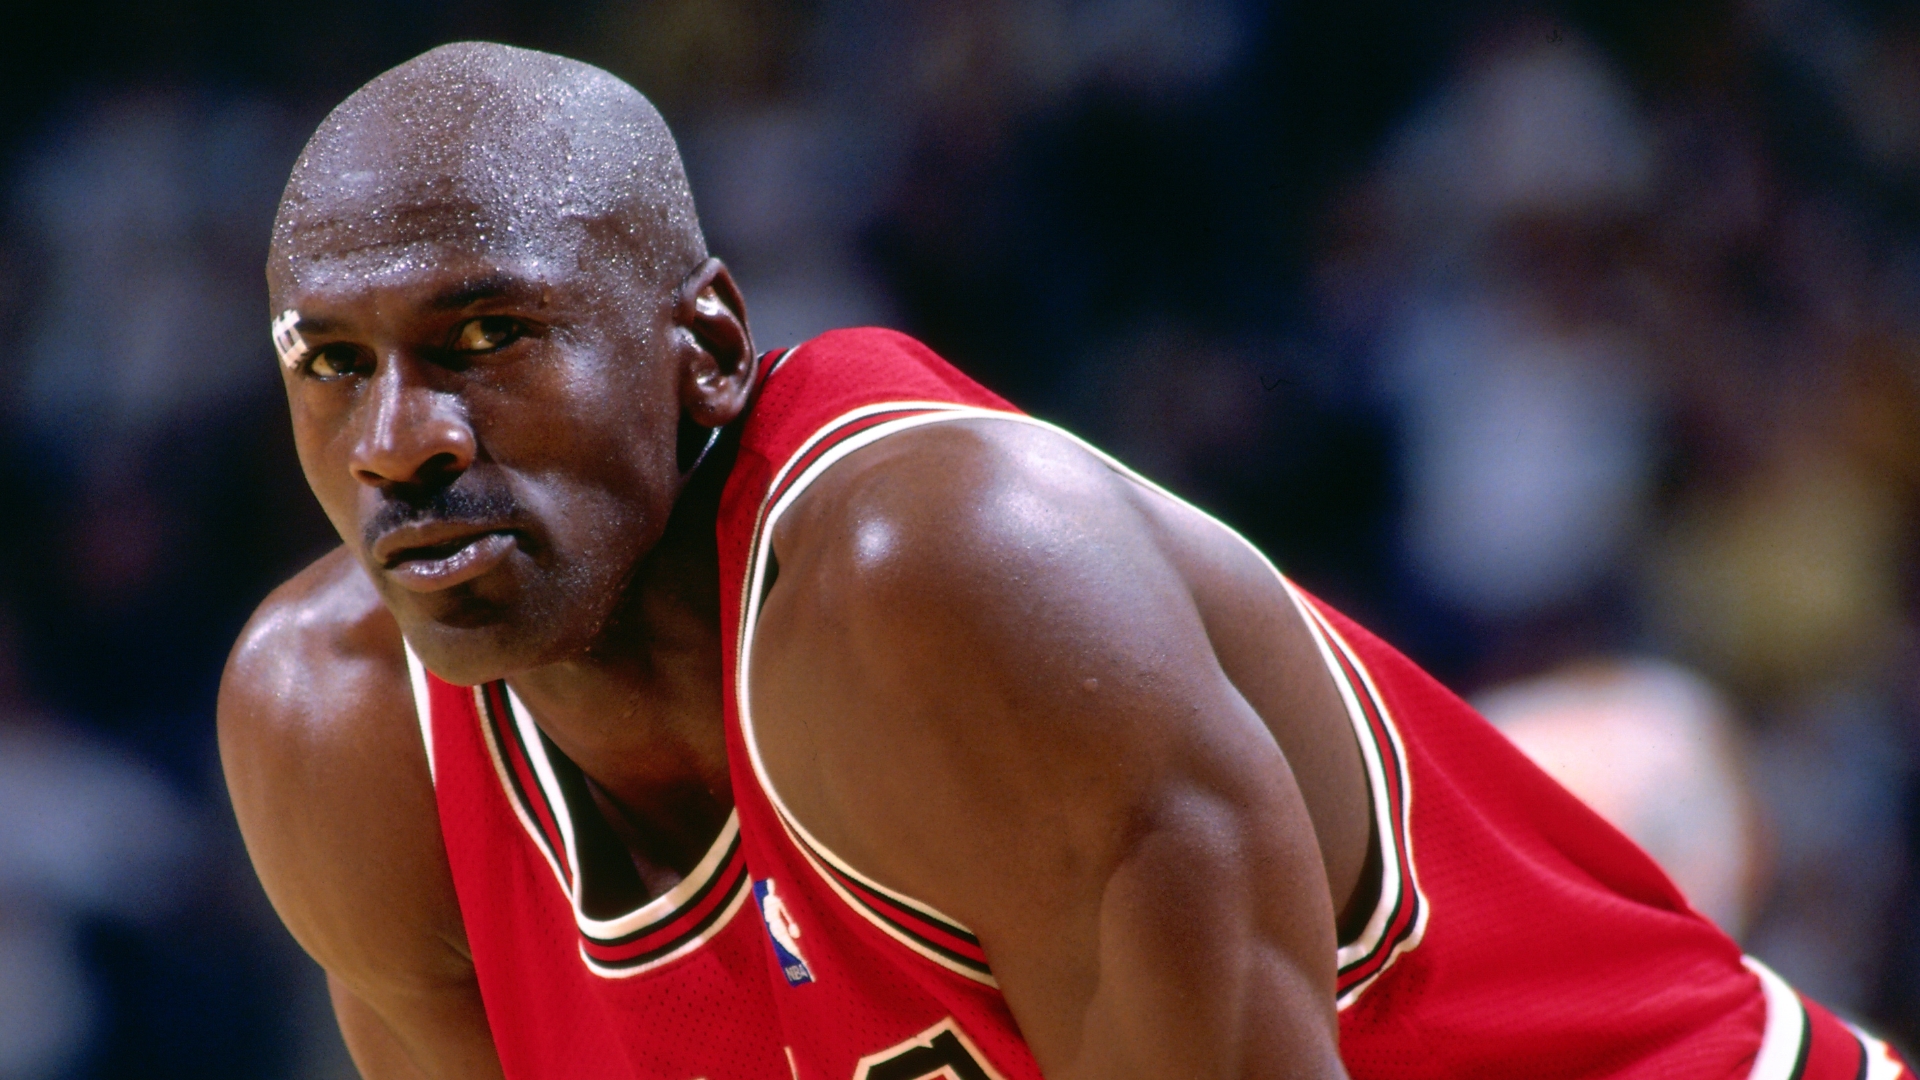 Michael Jordan docu-series 'The Last Dance' premieres on ESPN+ July 19 -  6abc Philadelphia